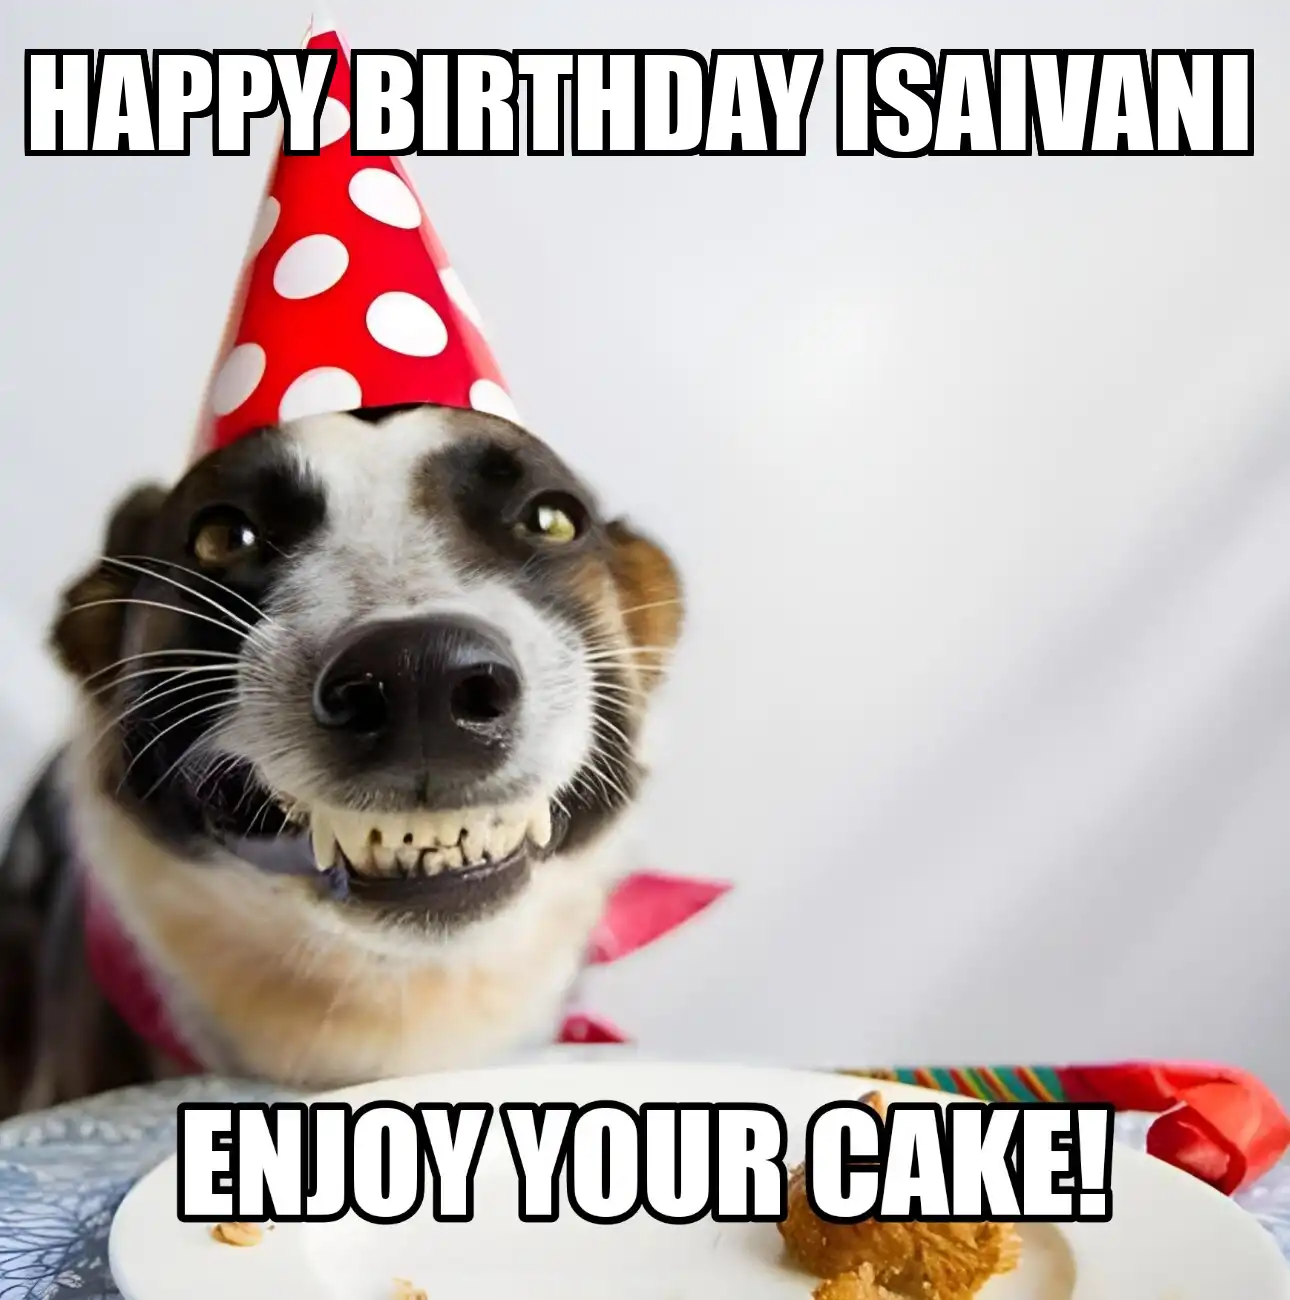 Happy Birthday Isaivani Enjoy Your Cake Dog Meme